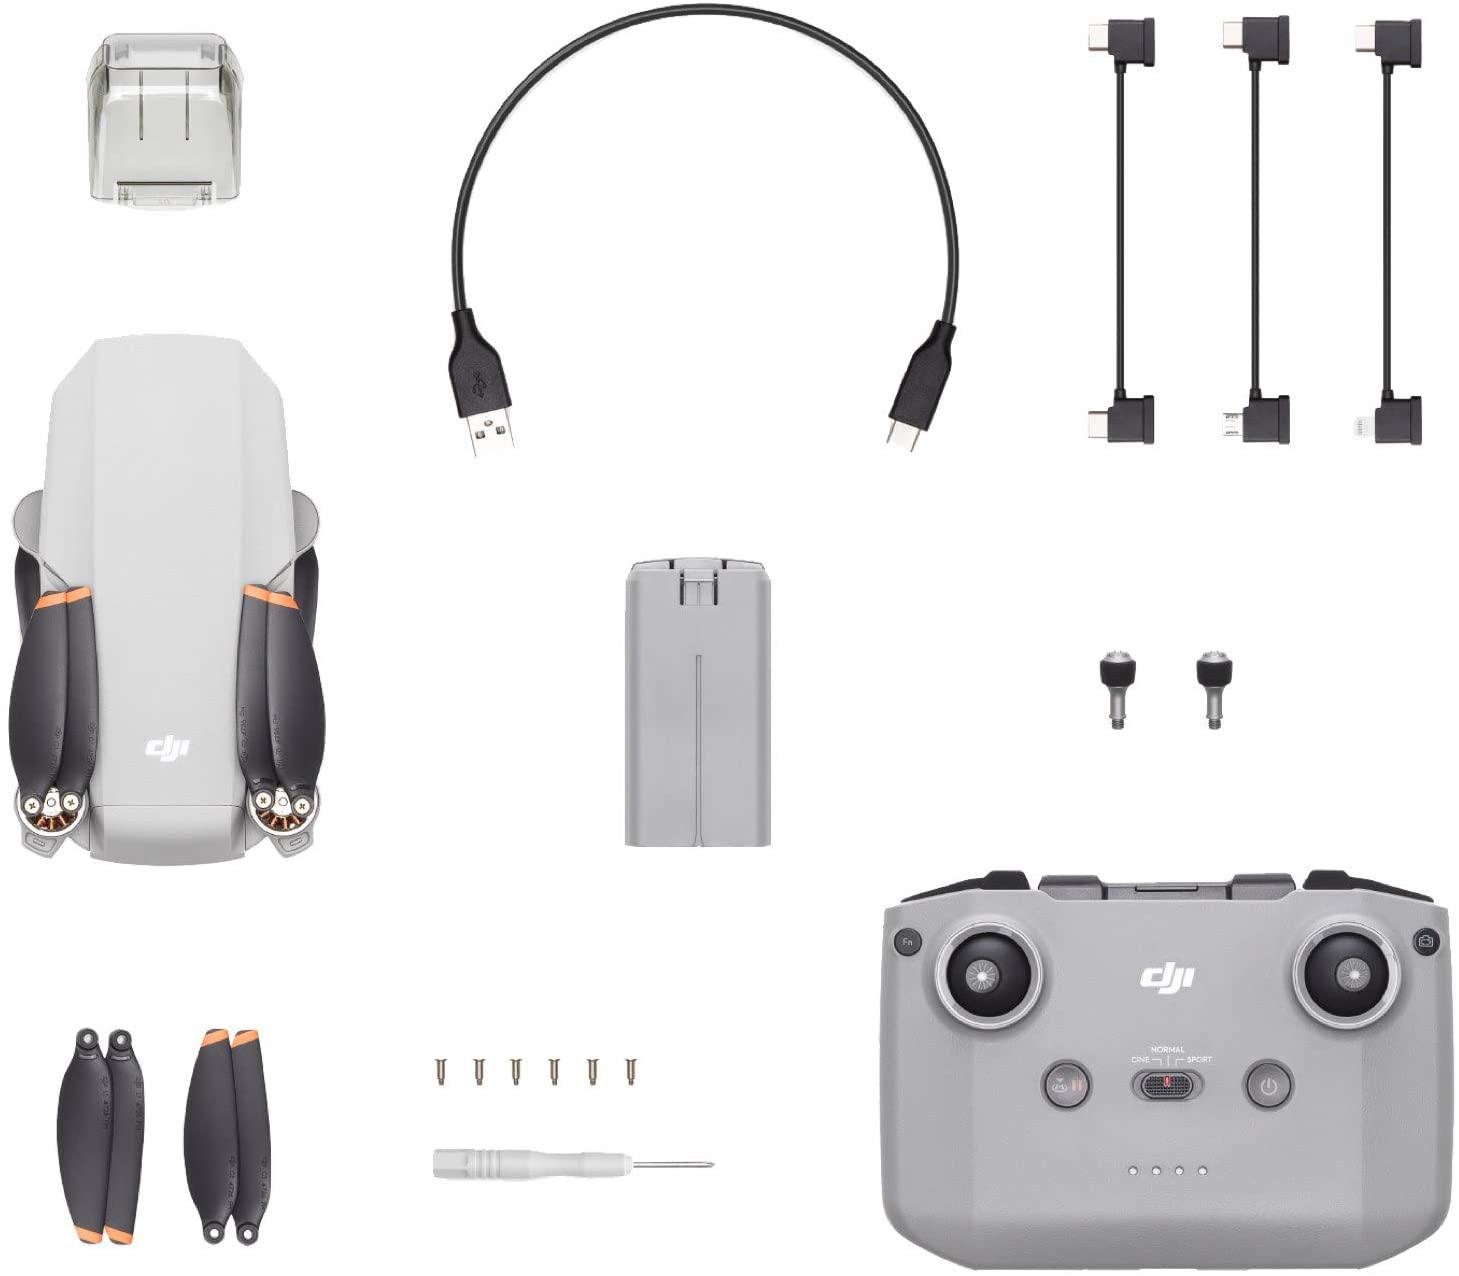 DJI Mini 2 - Ultraléger et Pliable Drone Quadcopter, 3 Axes Gimbal avec  Caméra 4K, Photo 12MP, 31 Minutes de Vol, OcuSync 2.0 HD Transmission  Vidéo